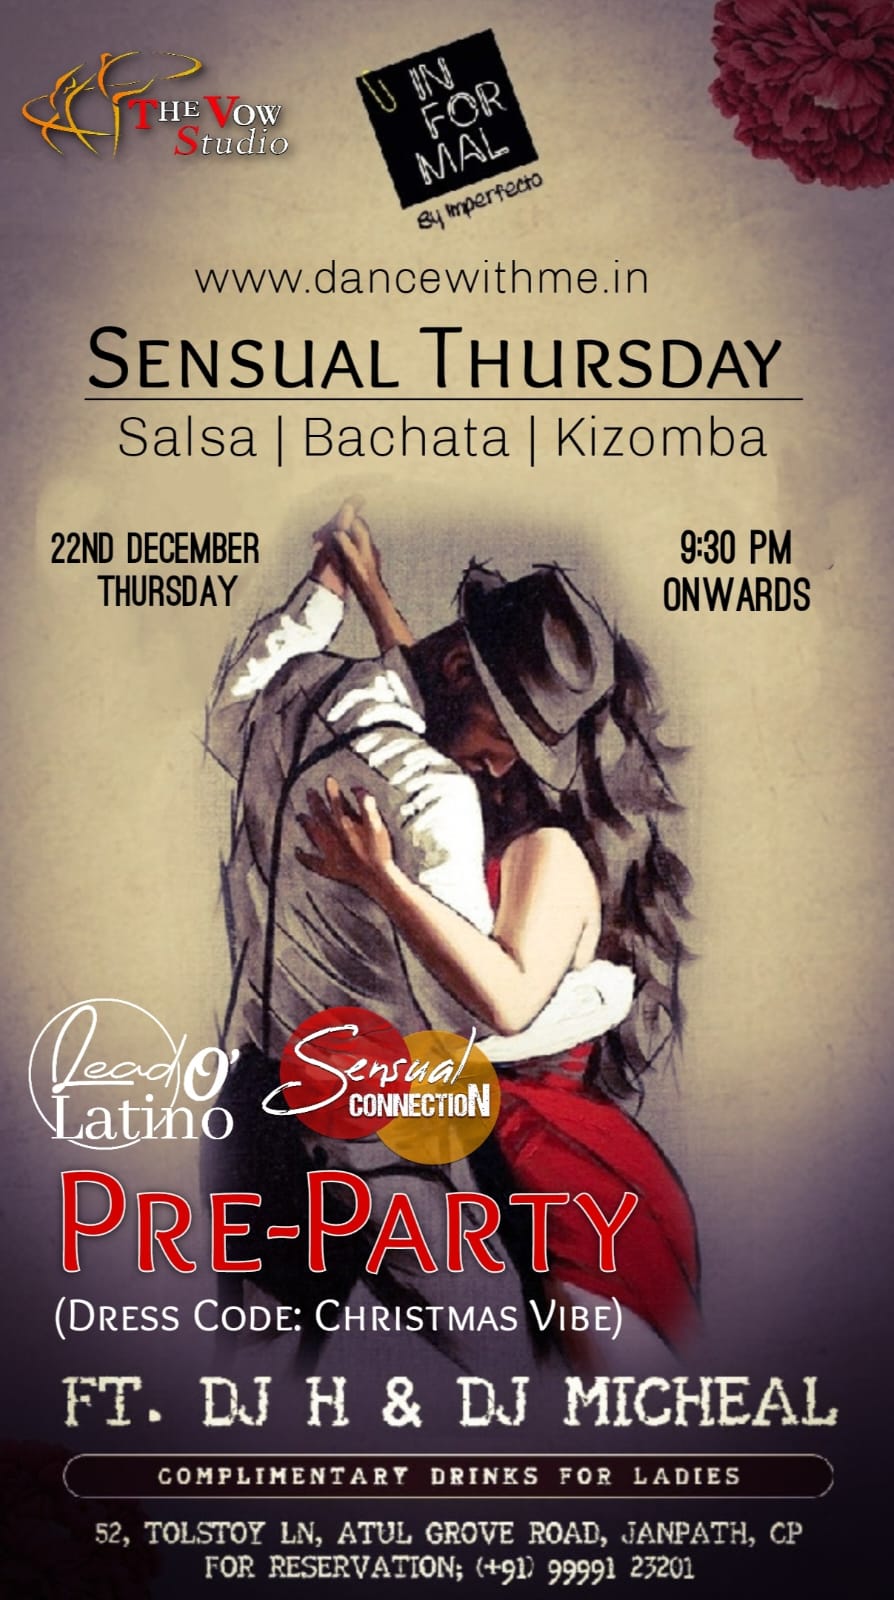 Sensual Thursday - Salsa Bachata Kizomba Social Night at Informal By Imperfecto New Delhi, Janpath Connaught Place CP Delhi NCR by The Vow Studio Himanshu - Dance With Me India Shakti